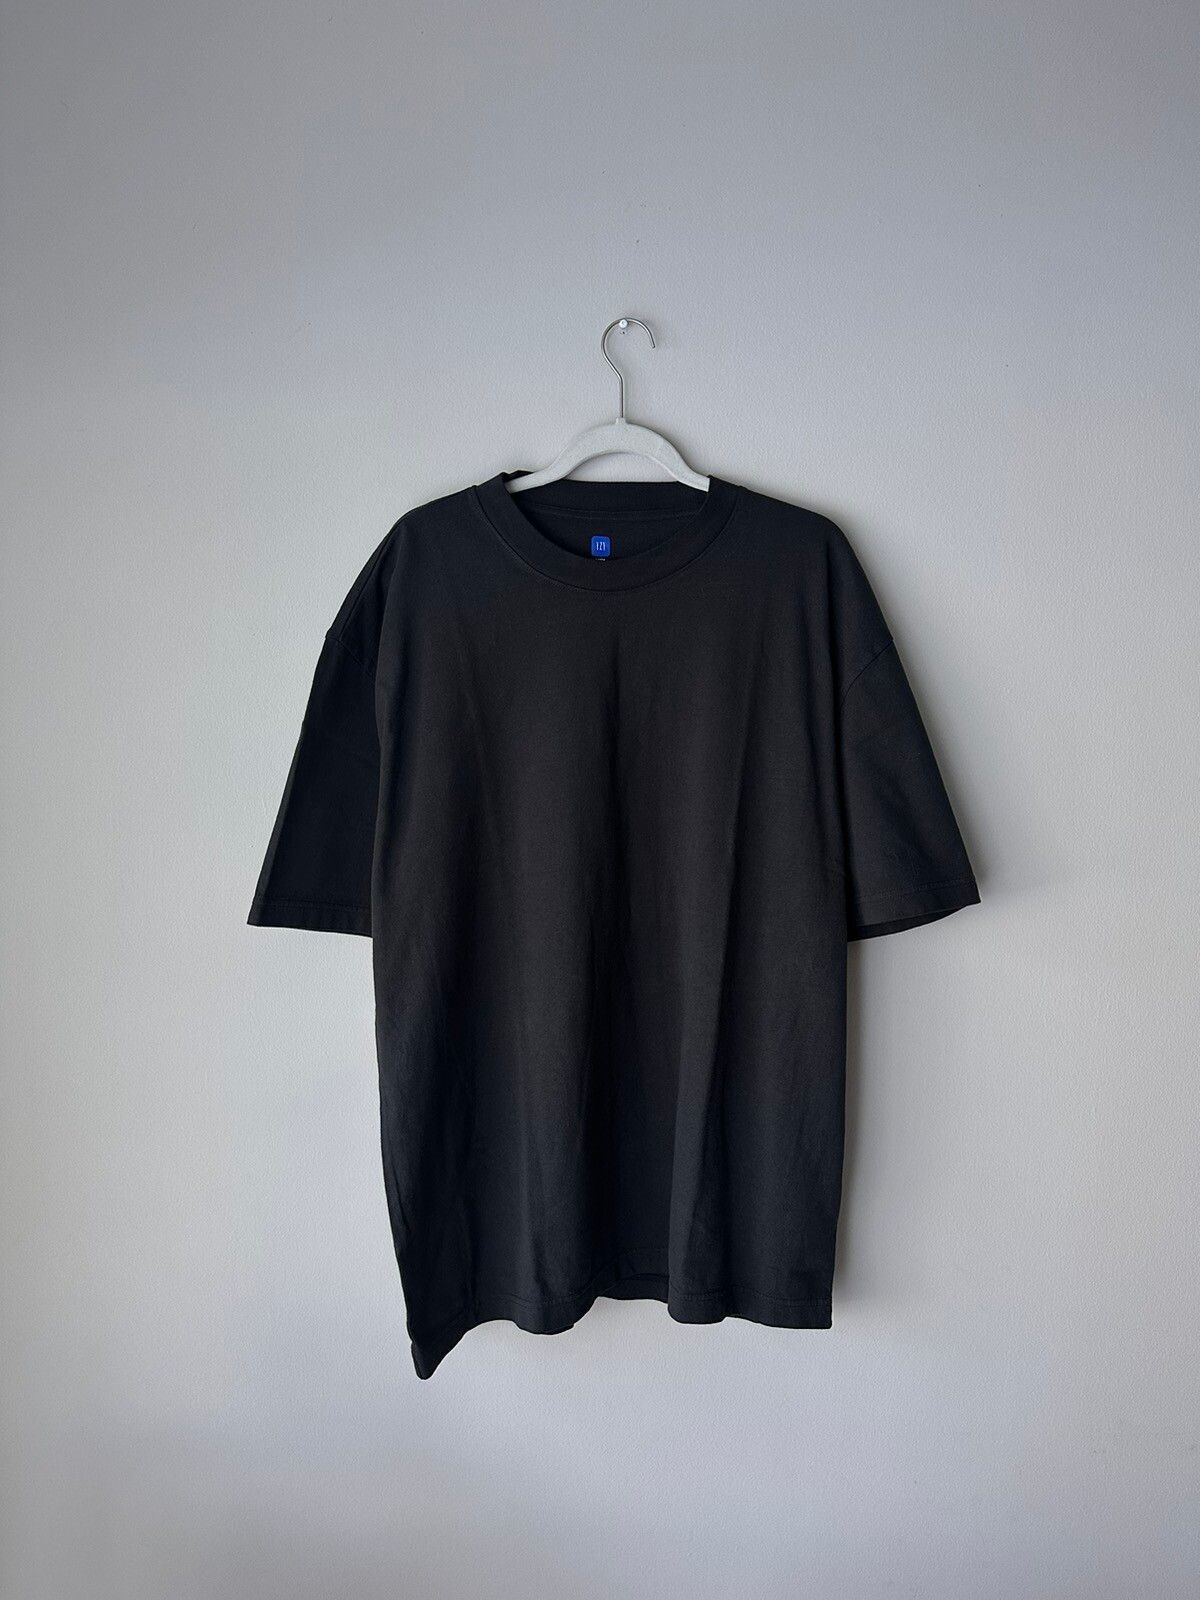 Gap Yeezy Gap YZY Unreleased Oversize T shirt Size L | Grailed